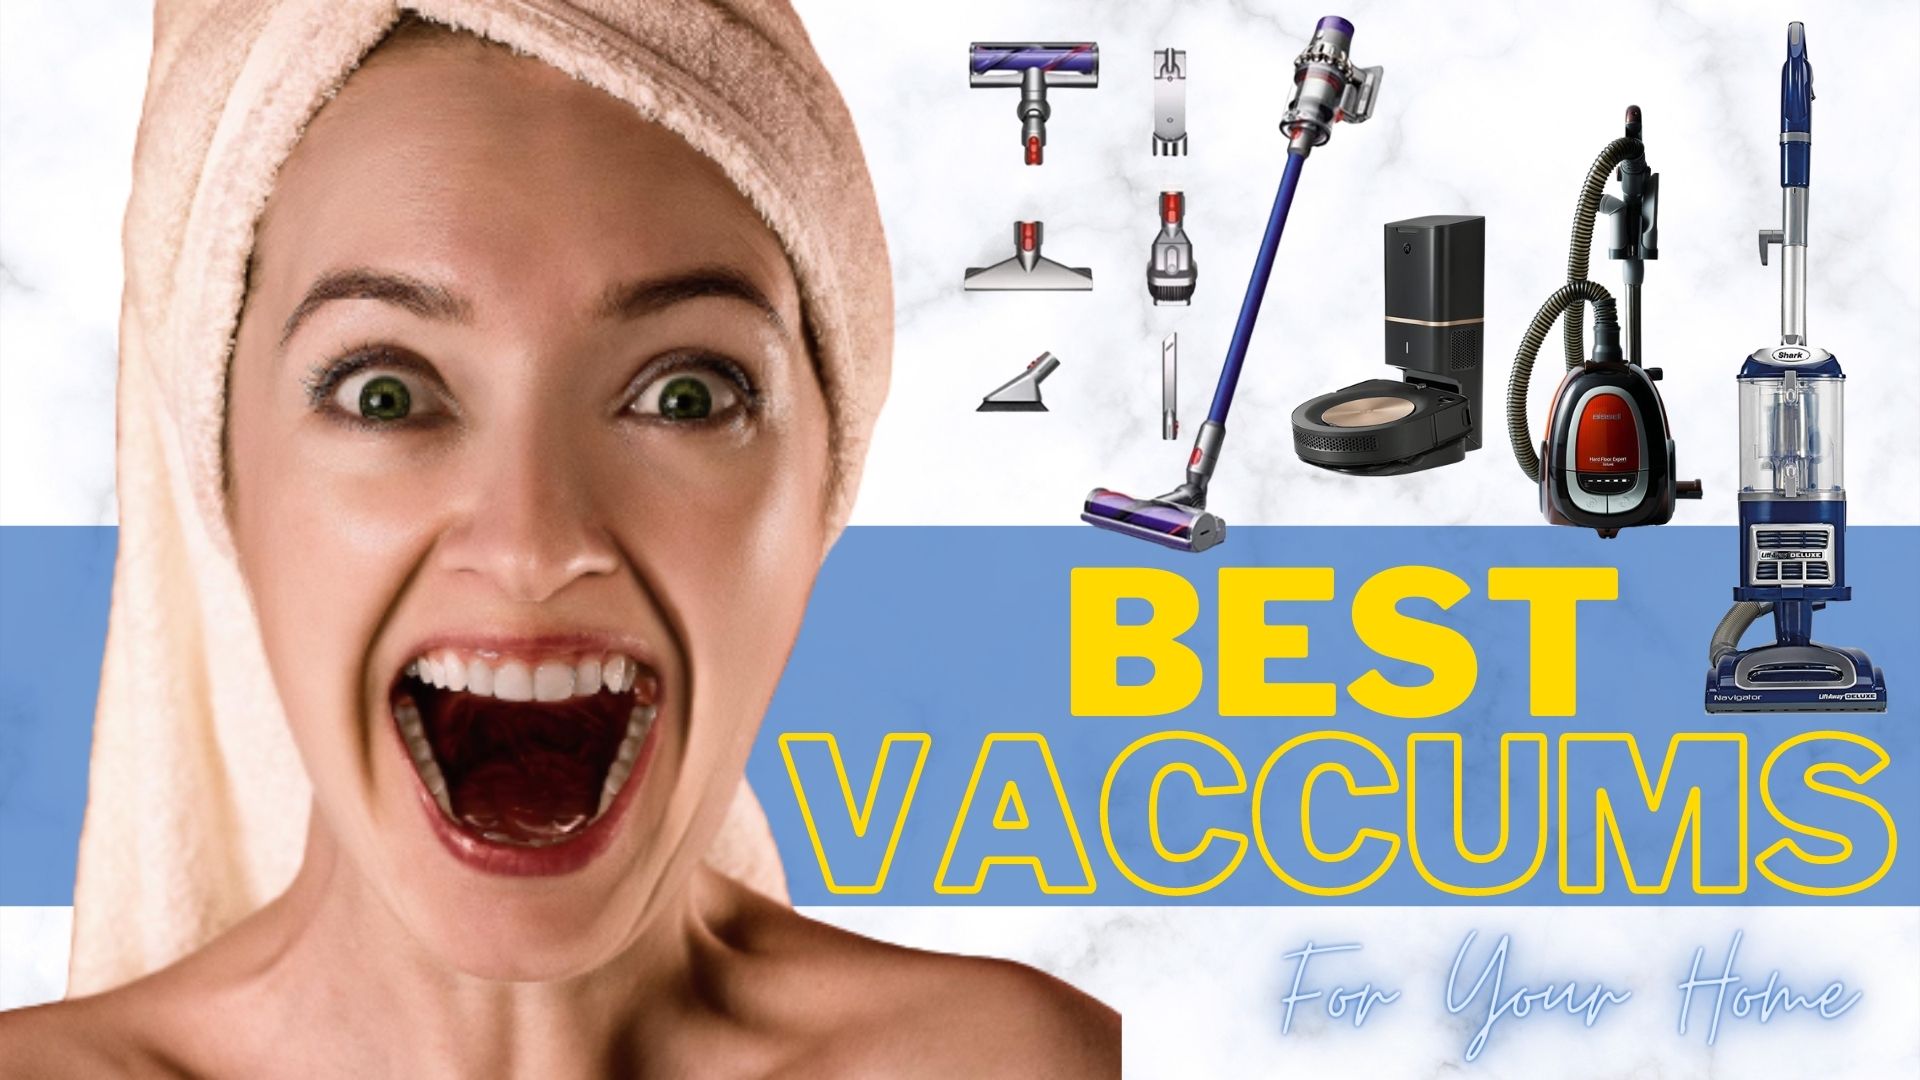 Best Vacuums